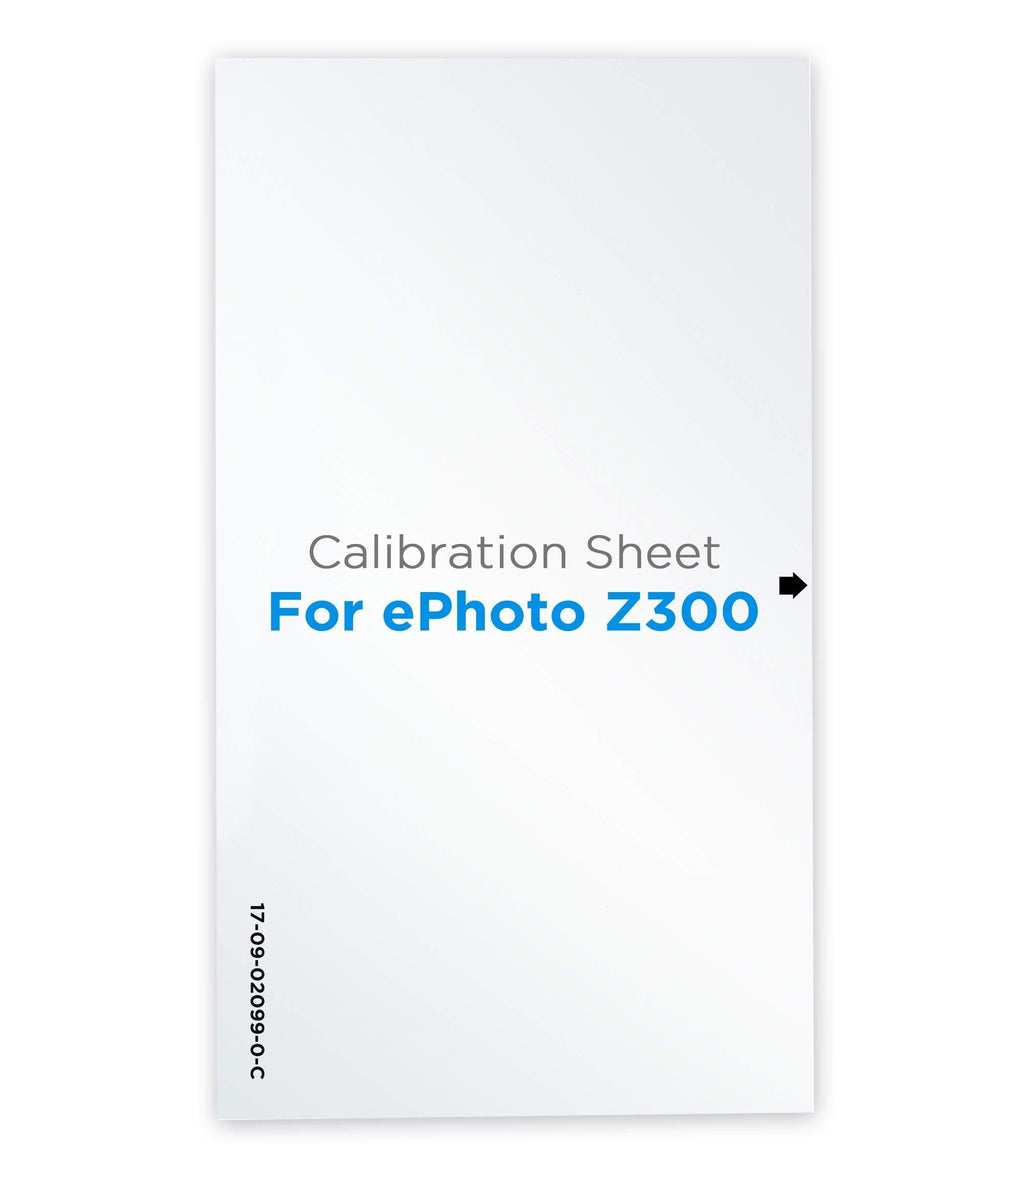  [AUSTRALIA] - Plustek Calibration Control Sheet - for ePhoto Z300 Scanner only